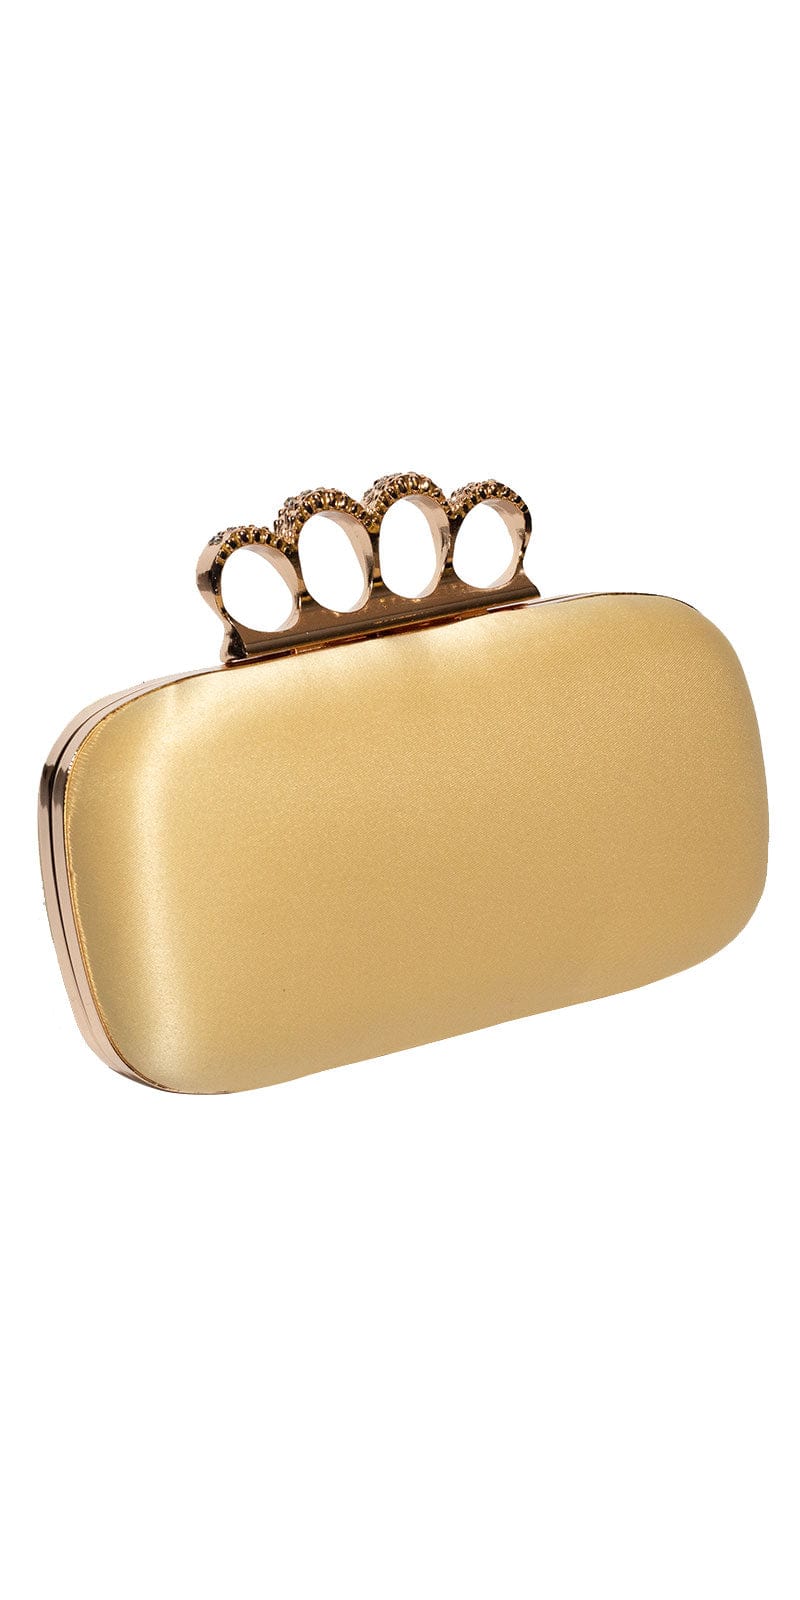 Camille La Vie 4 Ring Rhinestone Satin Handbag OS / gold